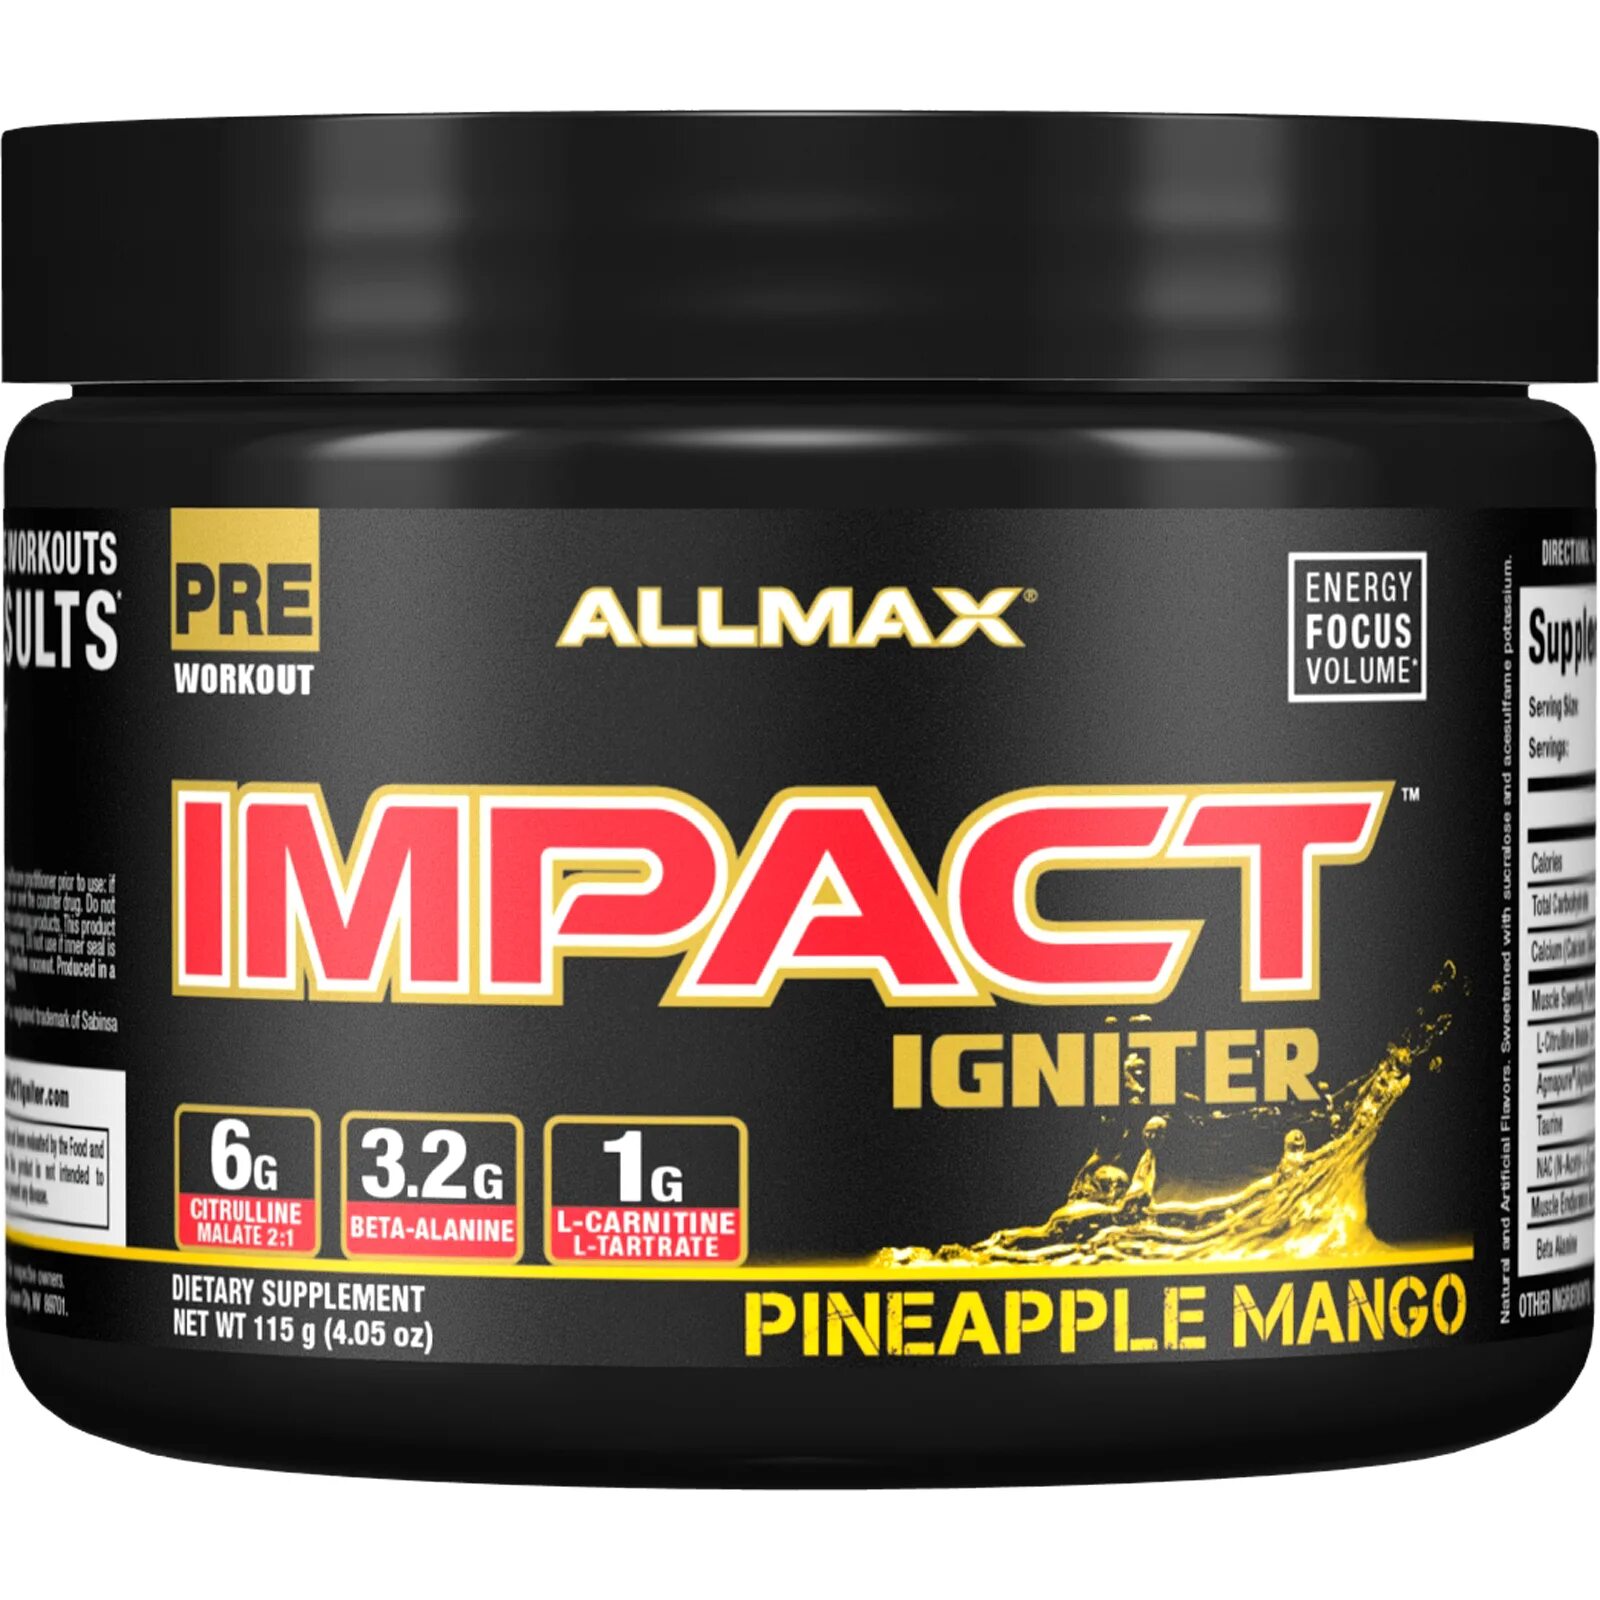 Предтрен креатин. Pre-Workout Igniter. Igniter предтрен. Добавка ALLMAX Igniter extreme. Креатин Nutrition Mango Pineapple.